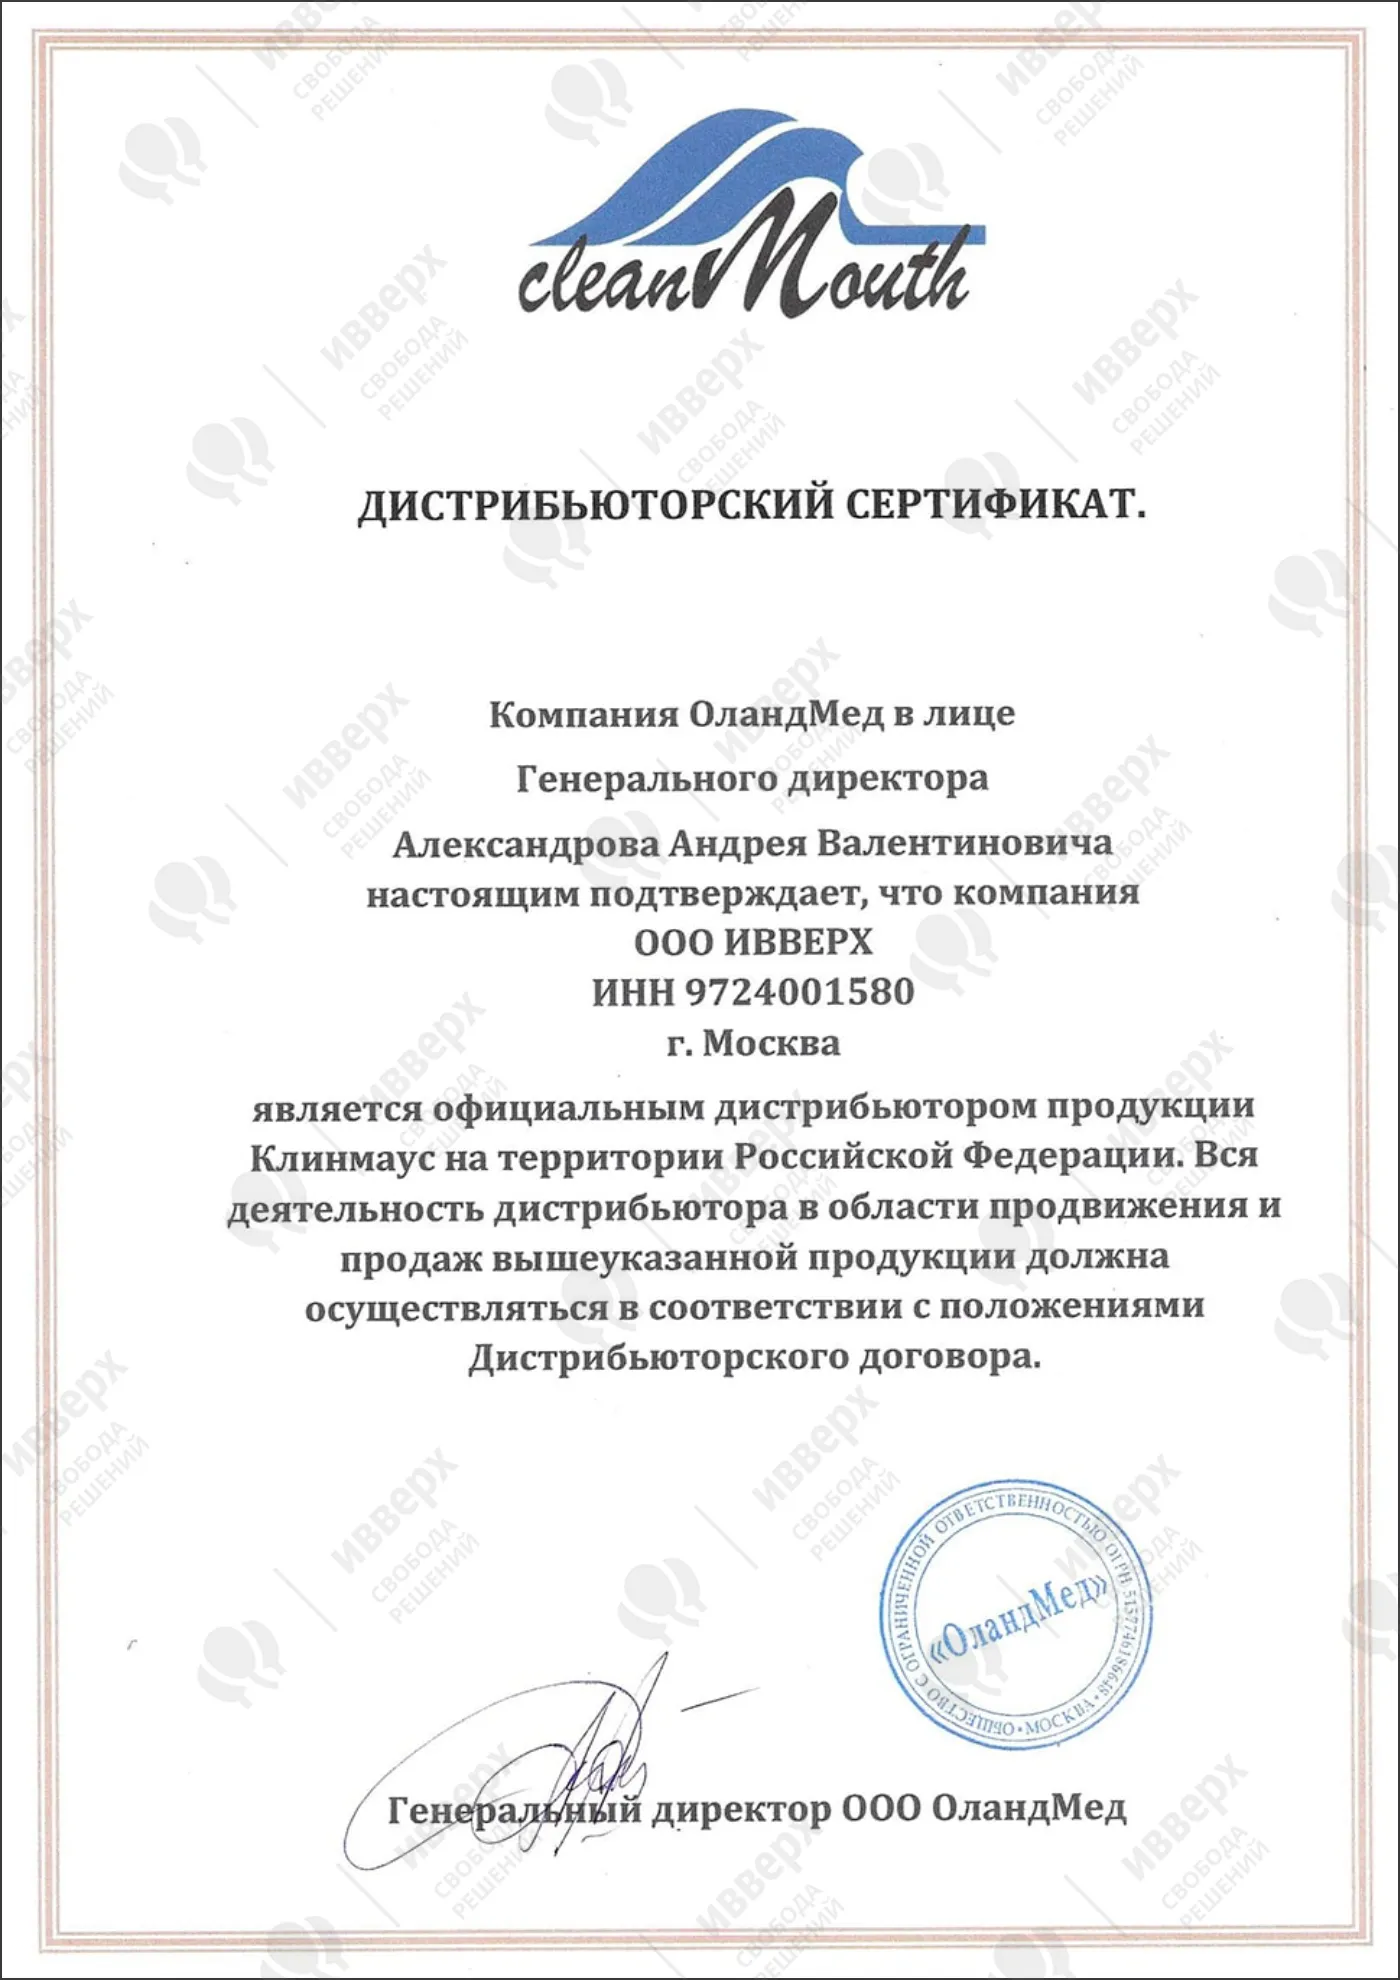 Дистрибьюторский сертификат ОландМед